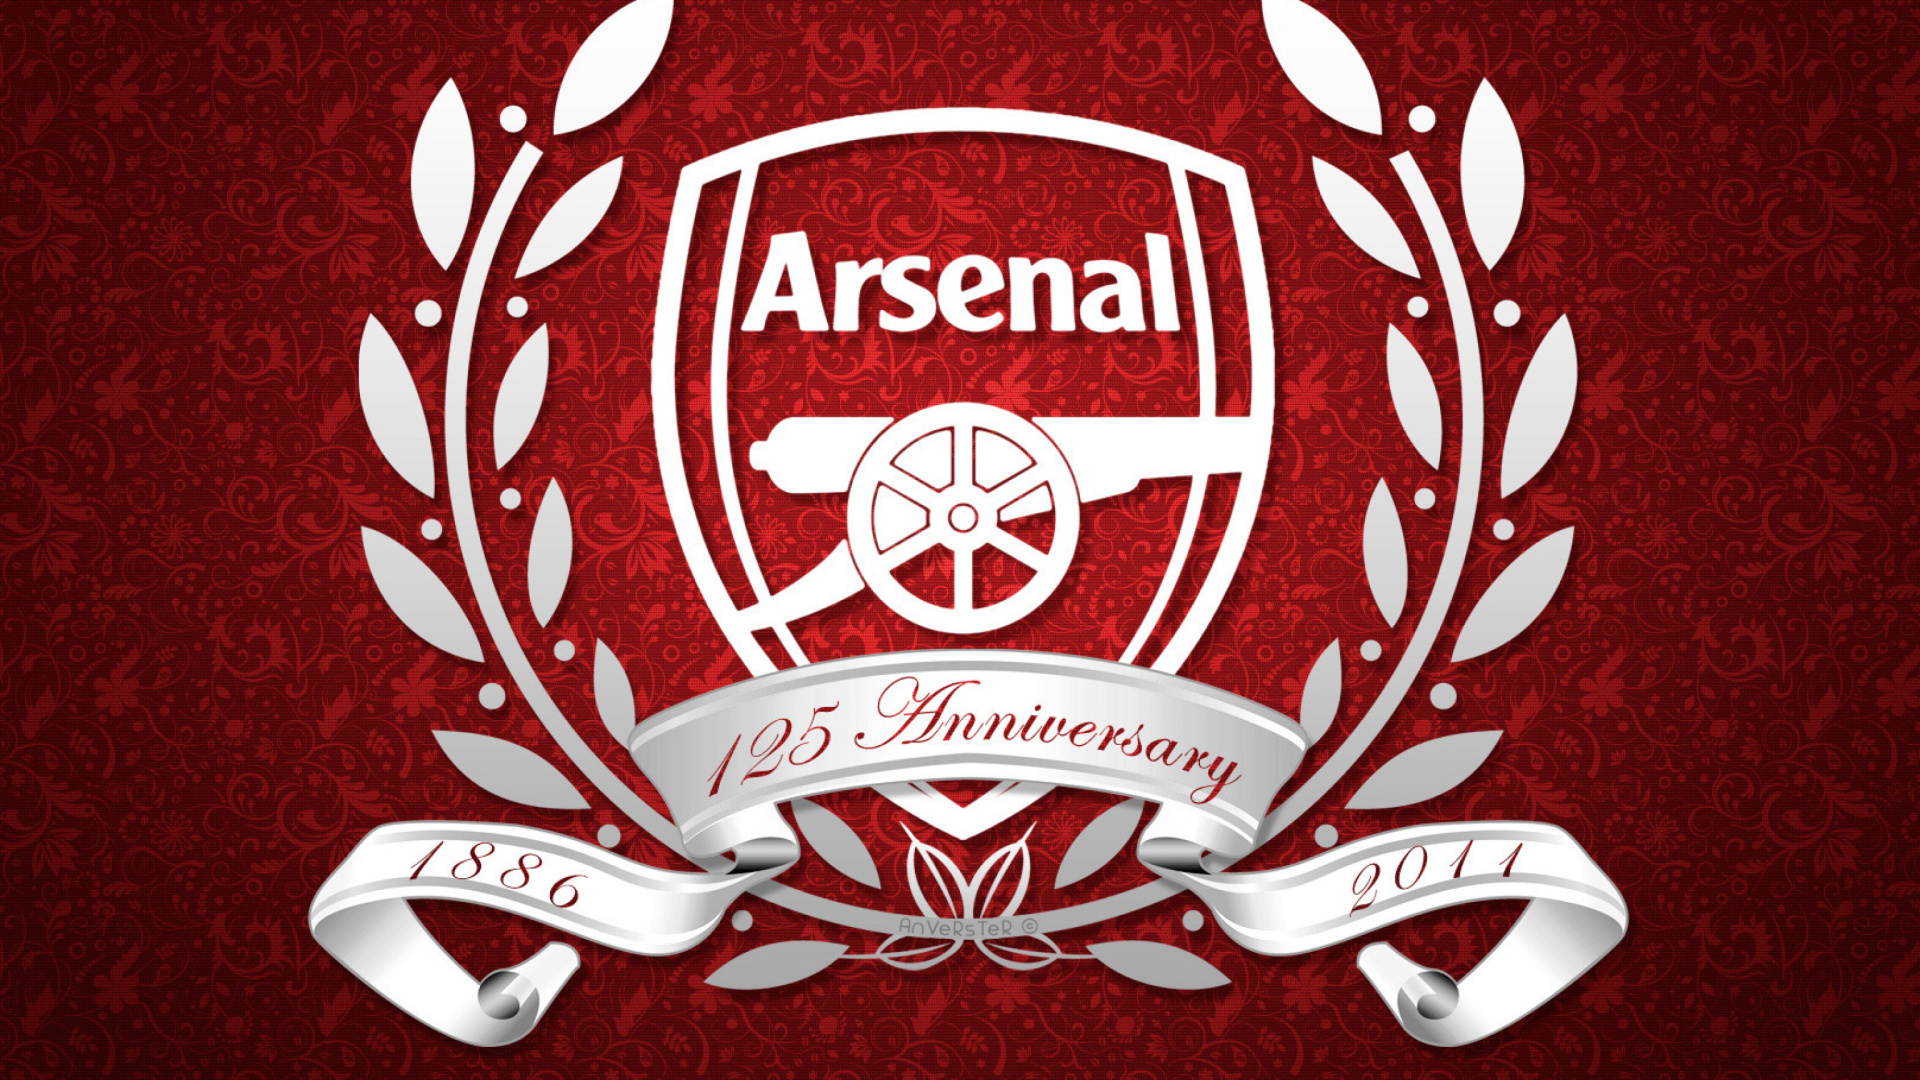 Das Arsenal FC Emblem Wallpaper 1920x1080